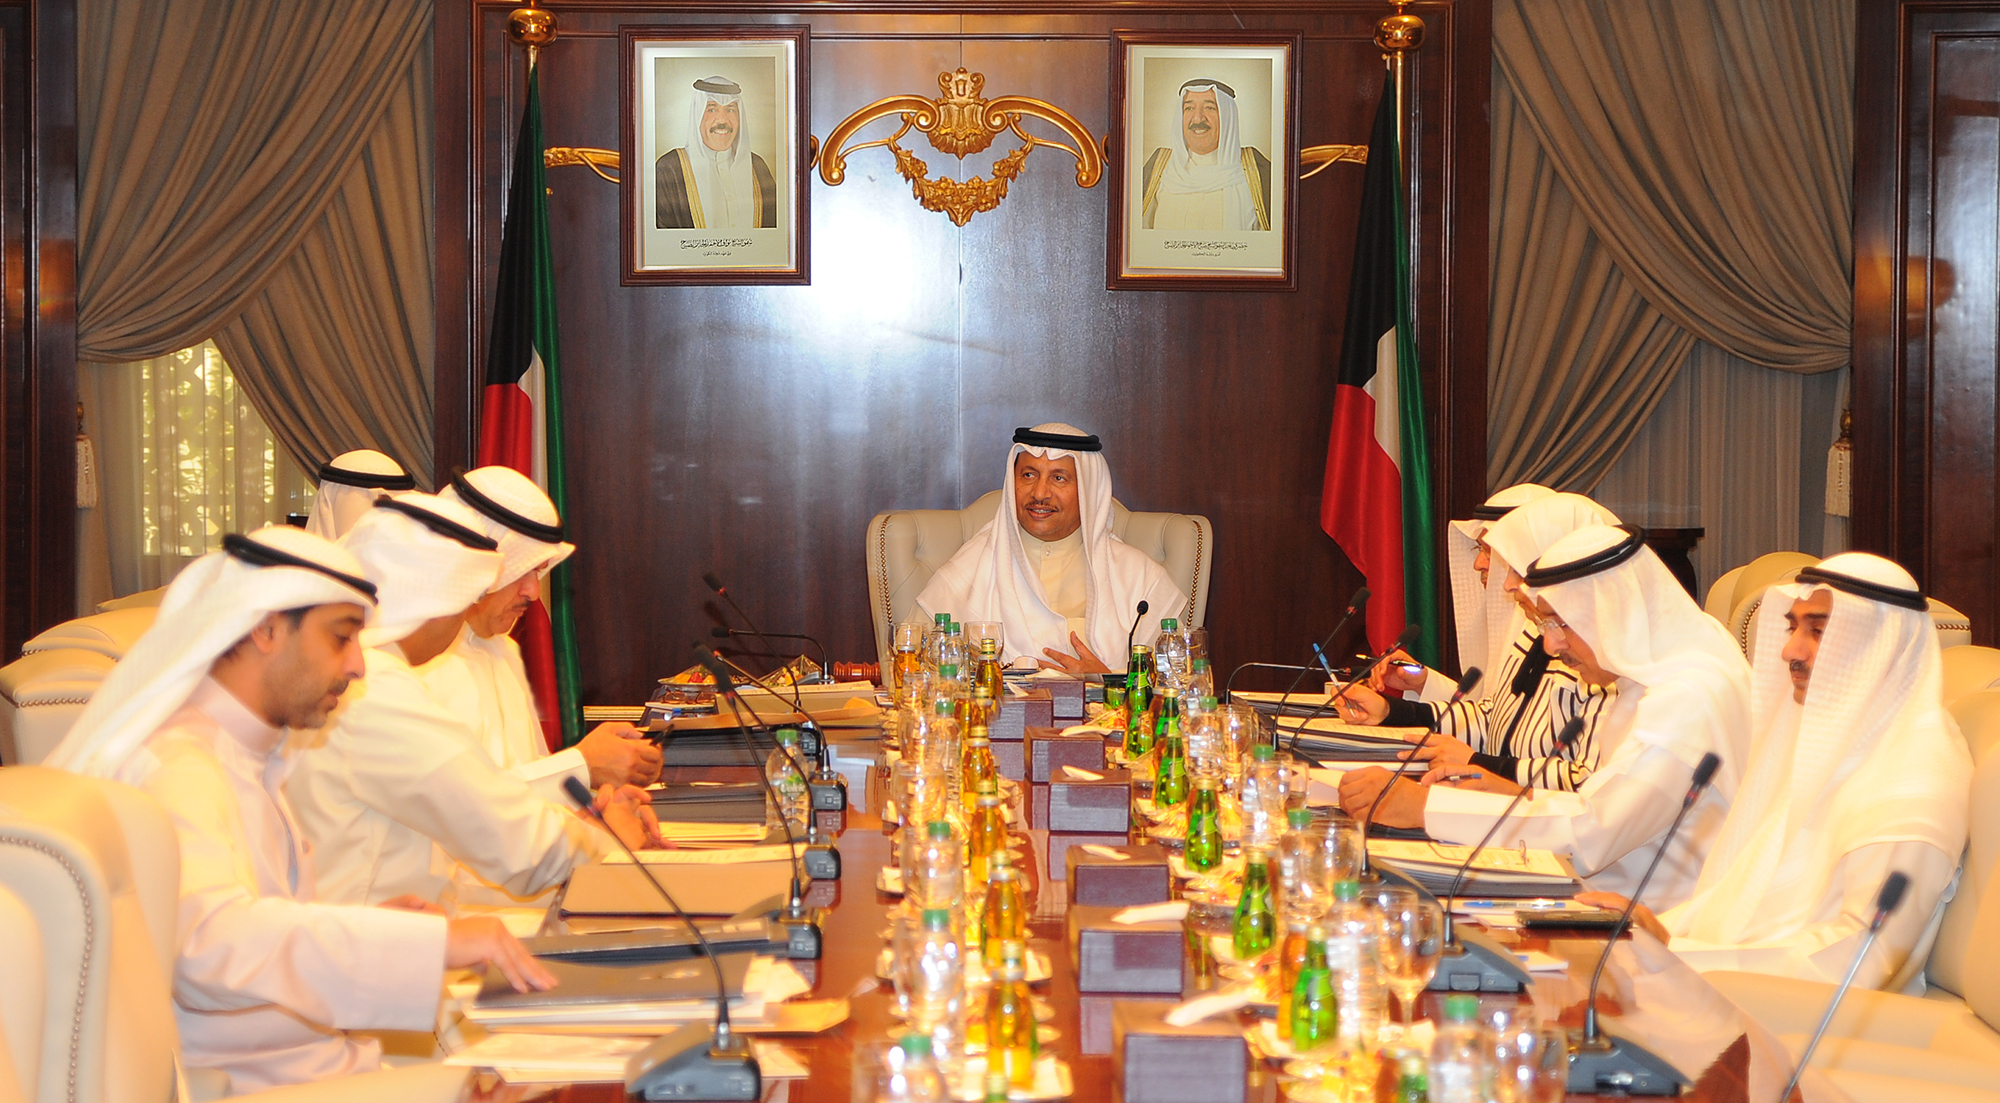 His Highness the Prime Minister Sheikh Jaber Al-Mubarak Al-Hamad Al-Sabah presides the cabinet weekly meeting